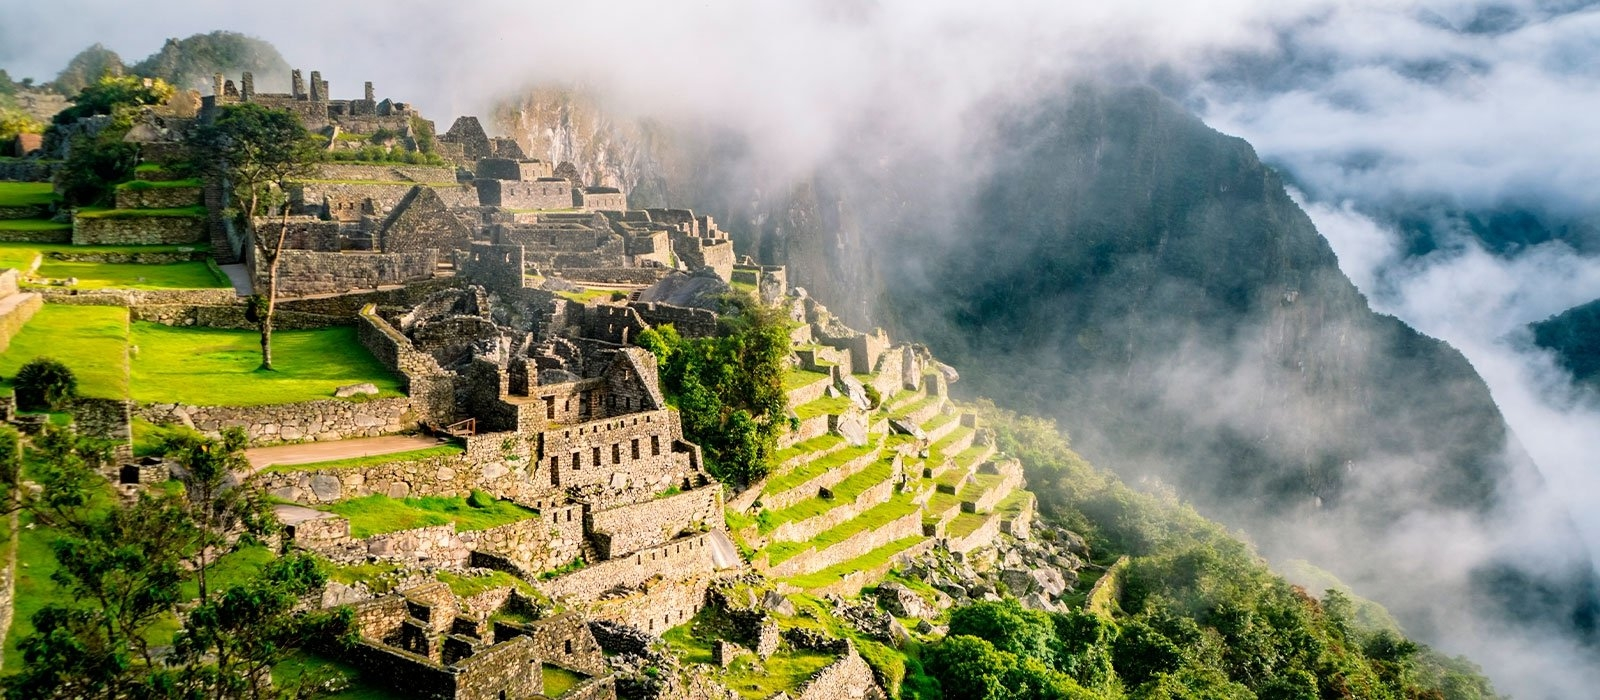 A close view of the Machu Picchu citadel